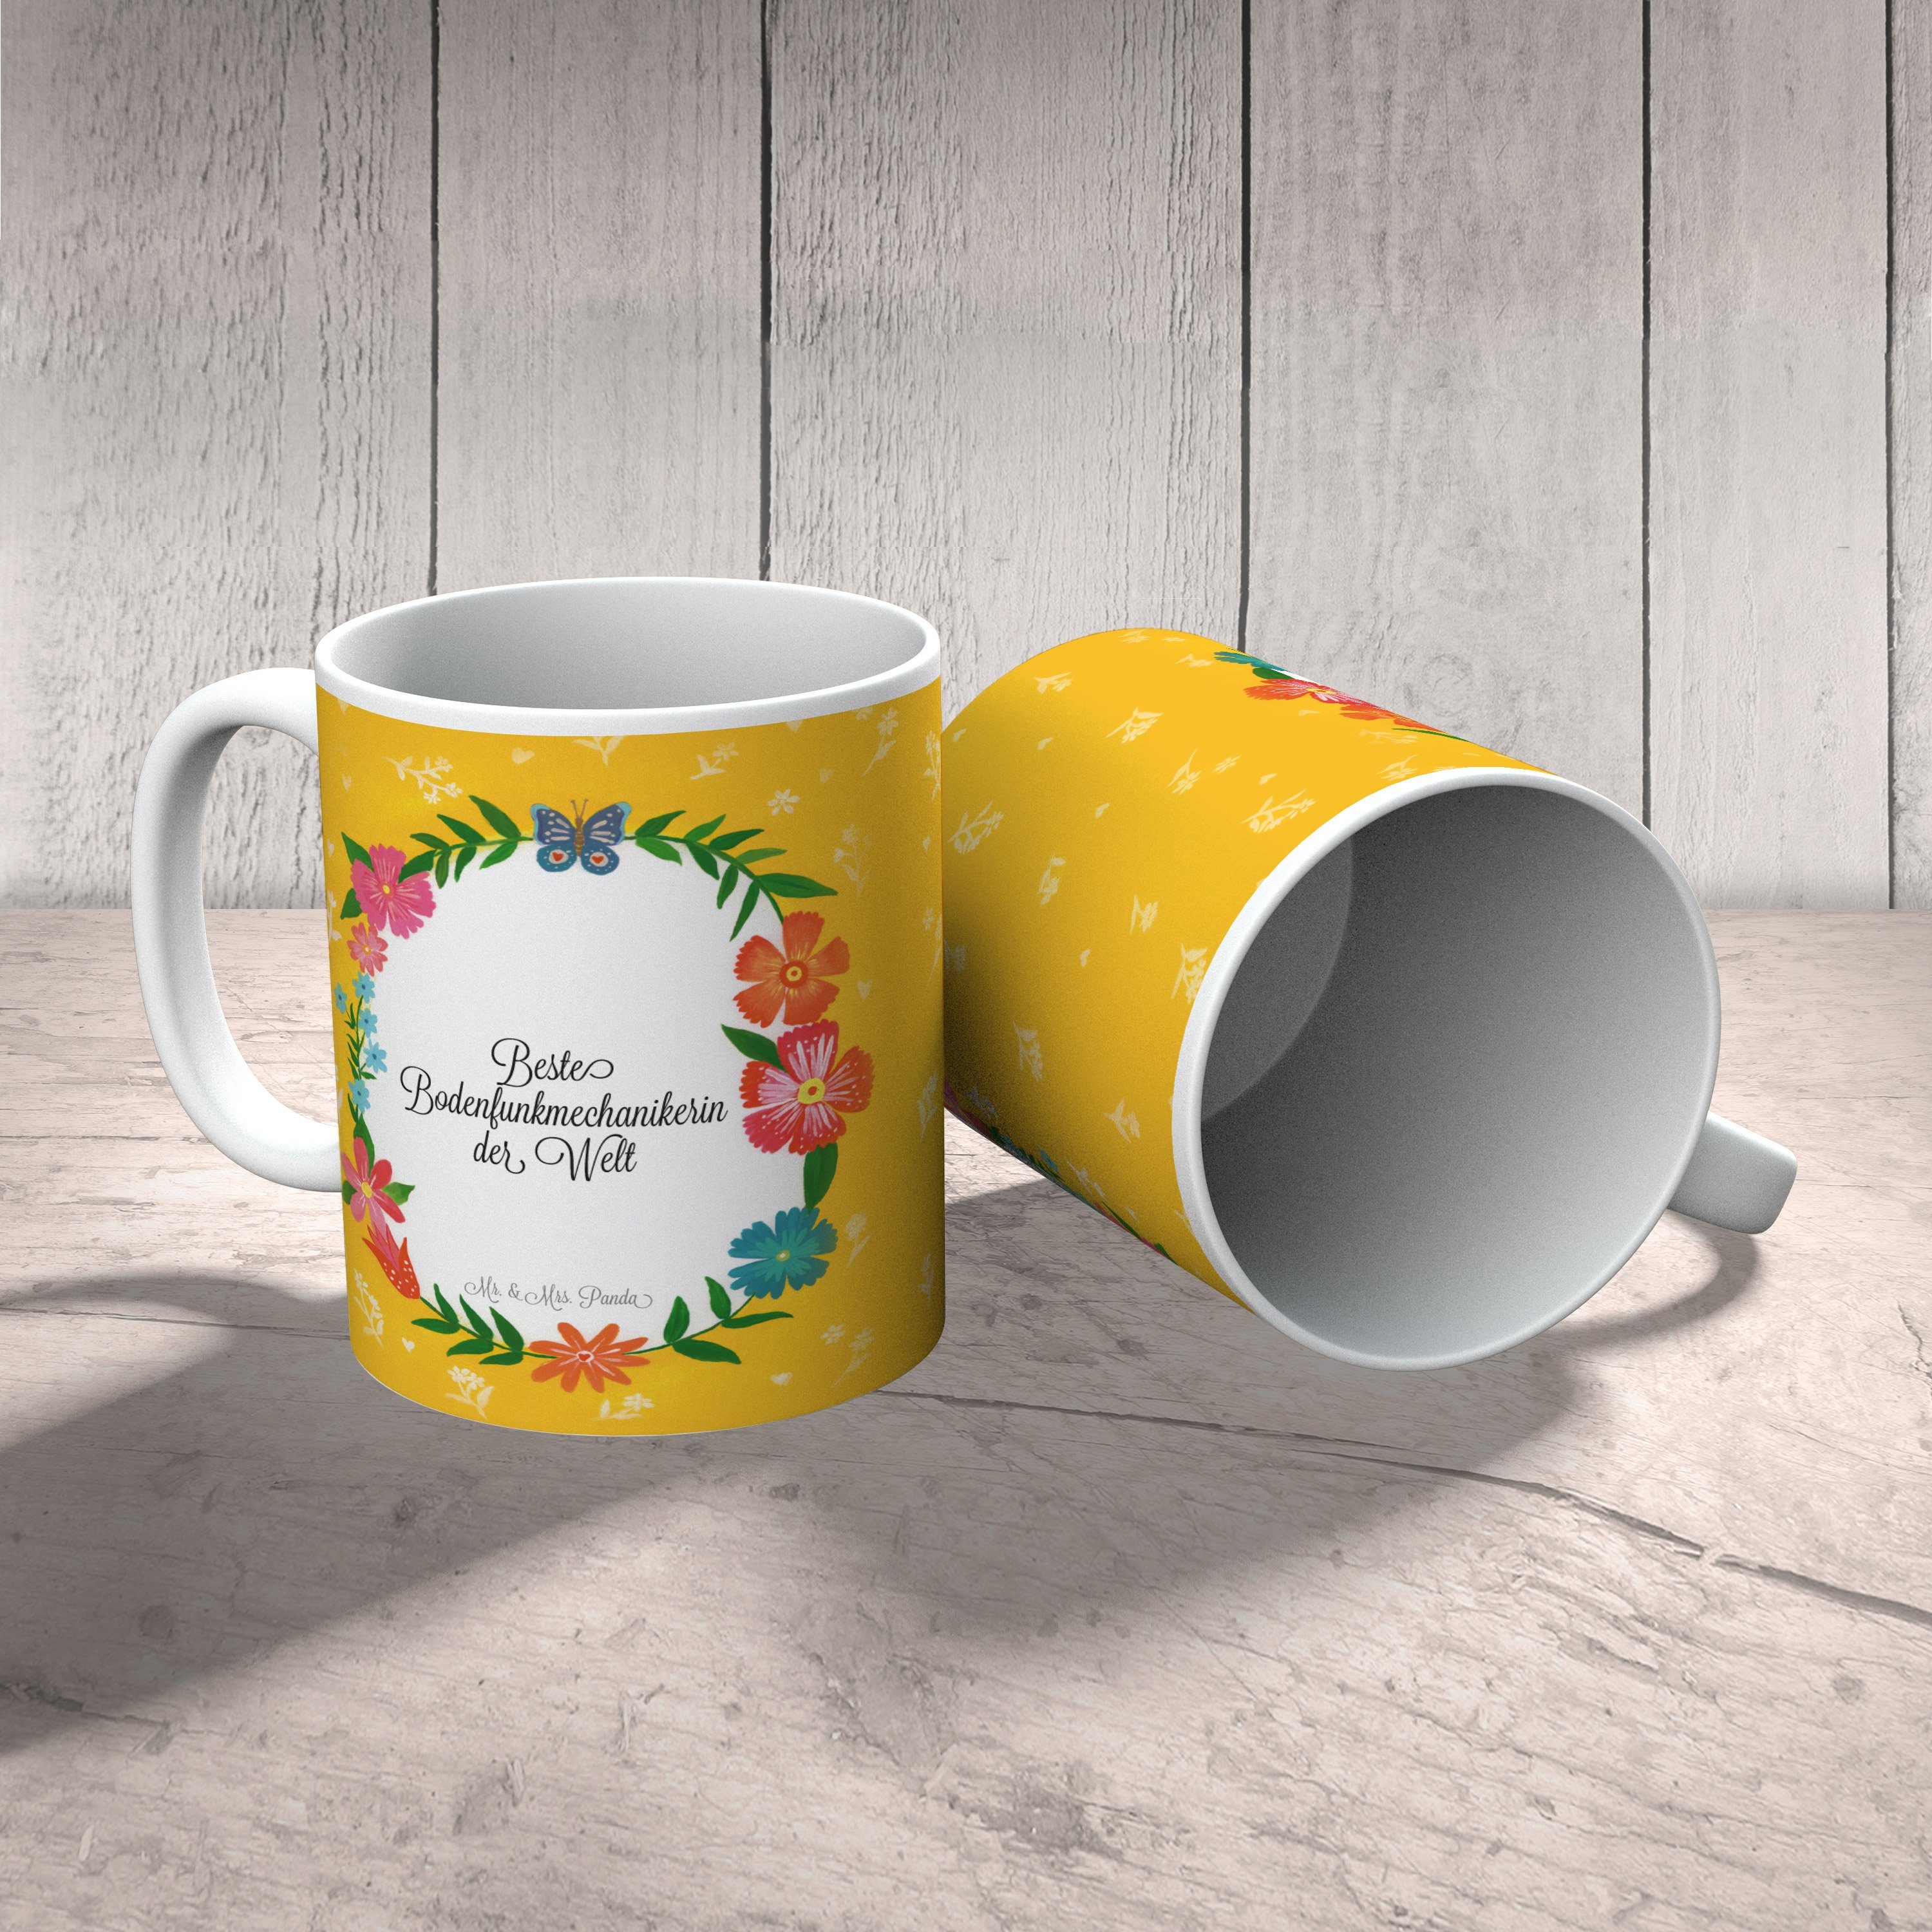 Mr. - Geschenk, Tasse Keramik Mrs. Panda Teebeche, Gratulation, & Kaffeebecher, Bodenfunkmechanikerin